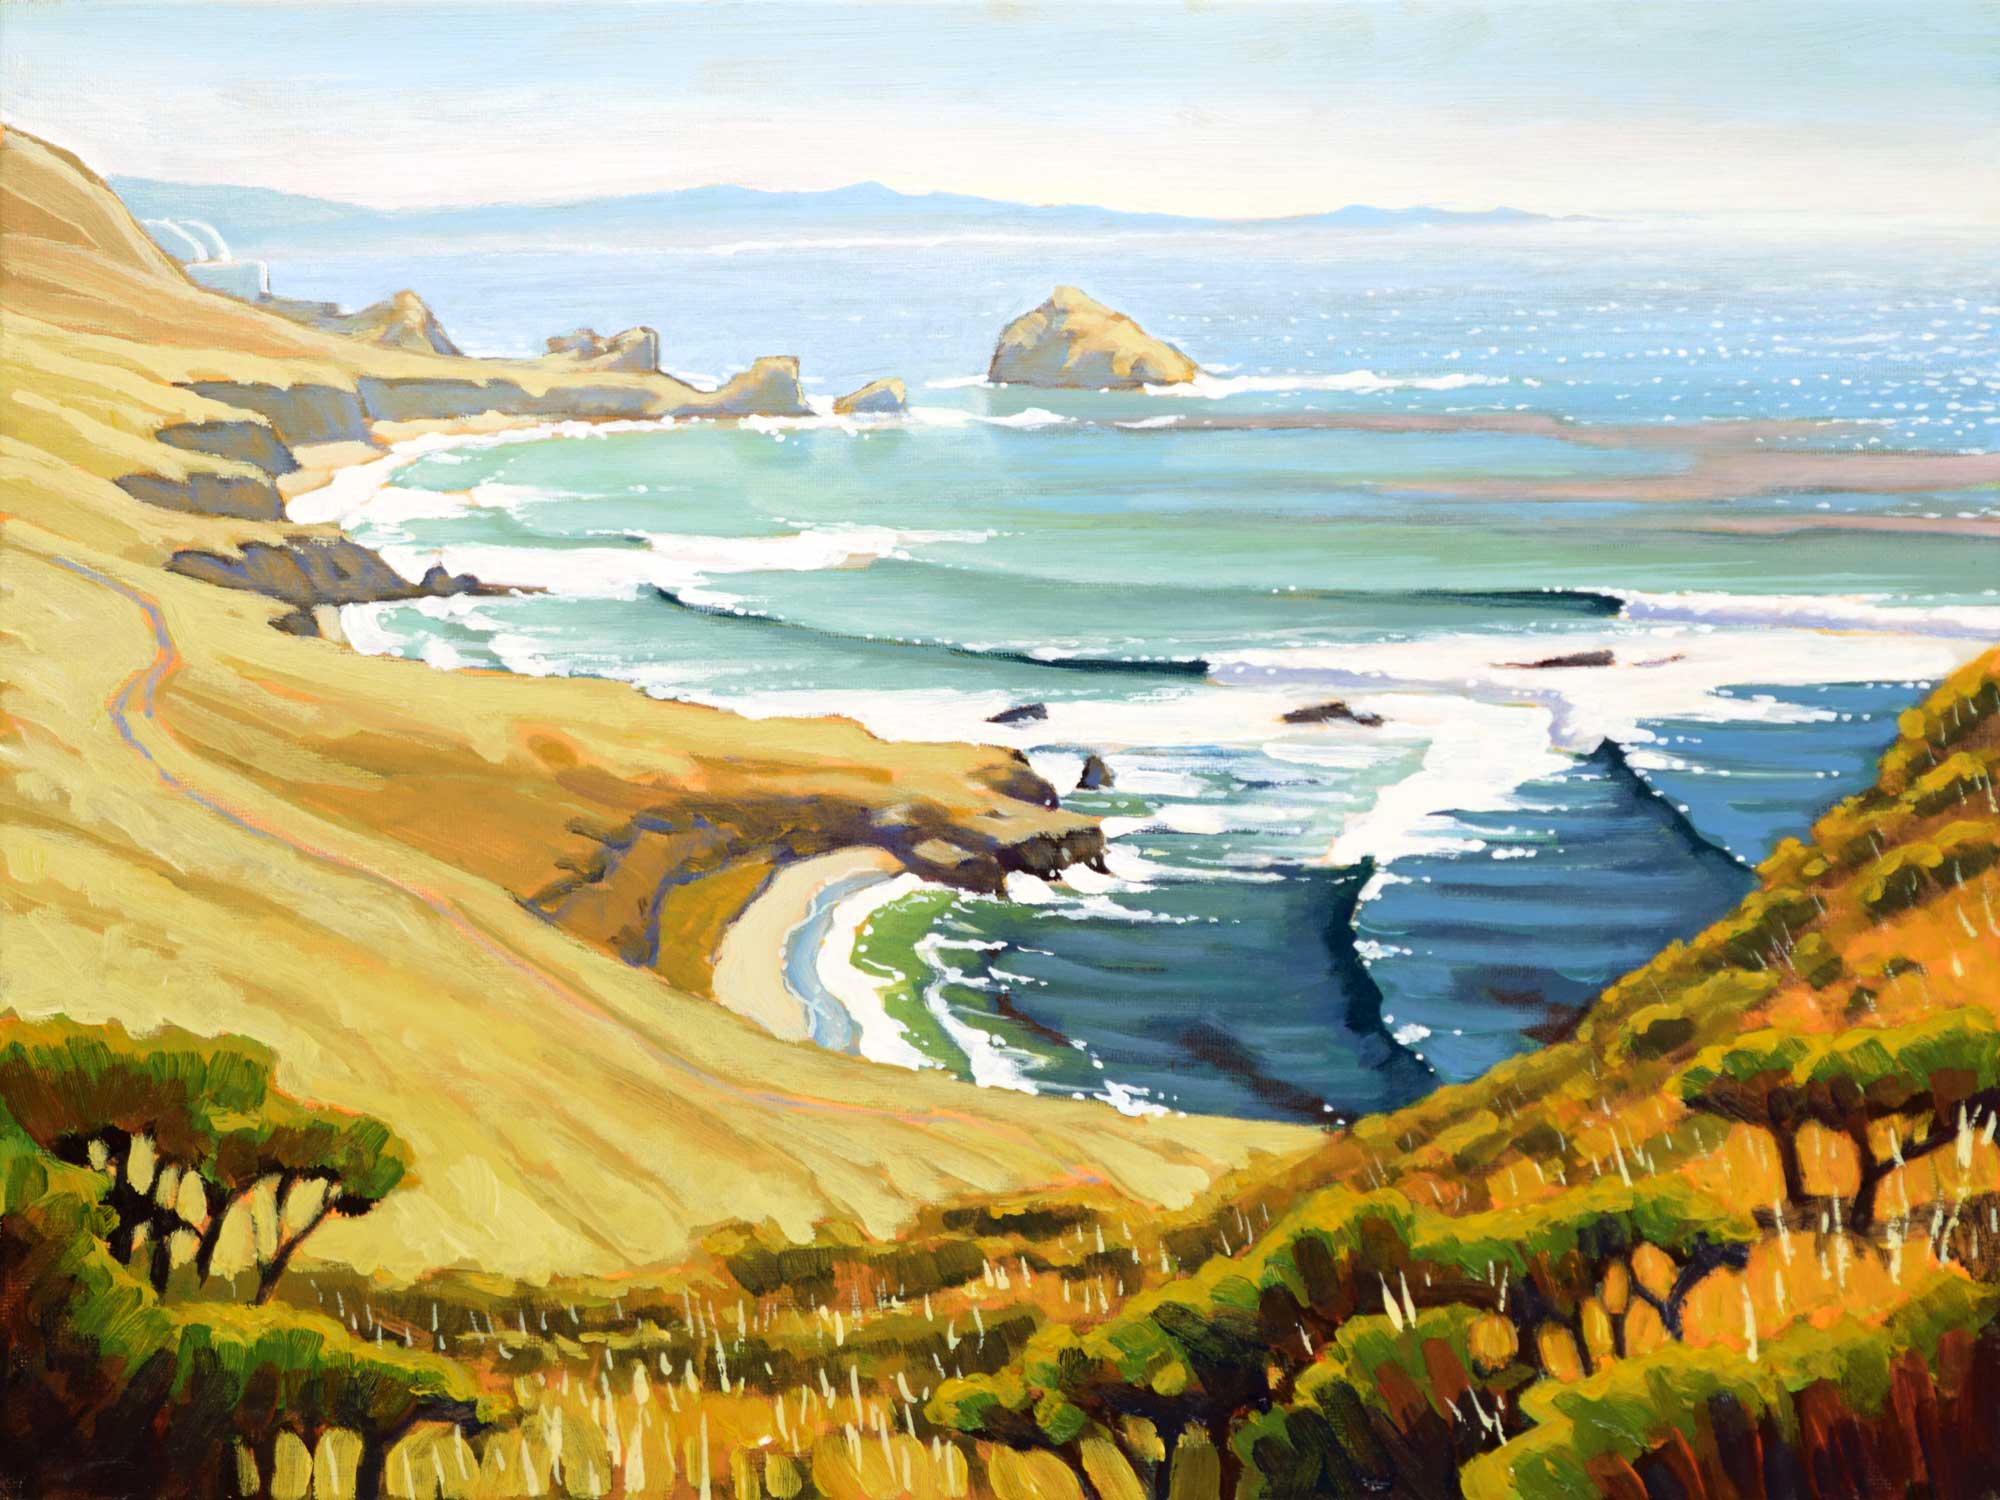 Landscape plein air painting near Point Buchon and Diablo Canyon on the San Luis Obispo county coast of California